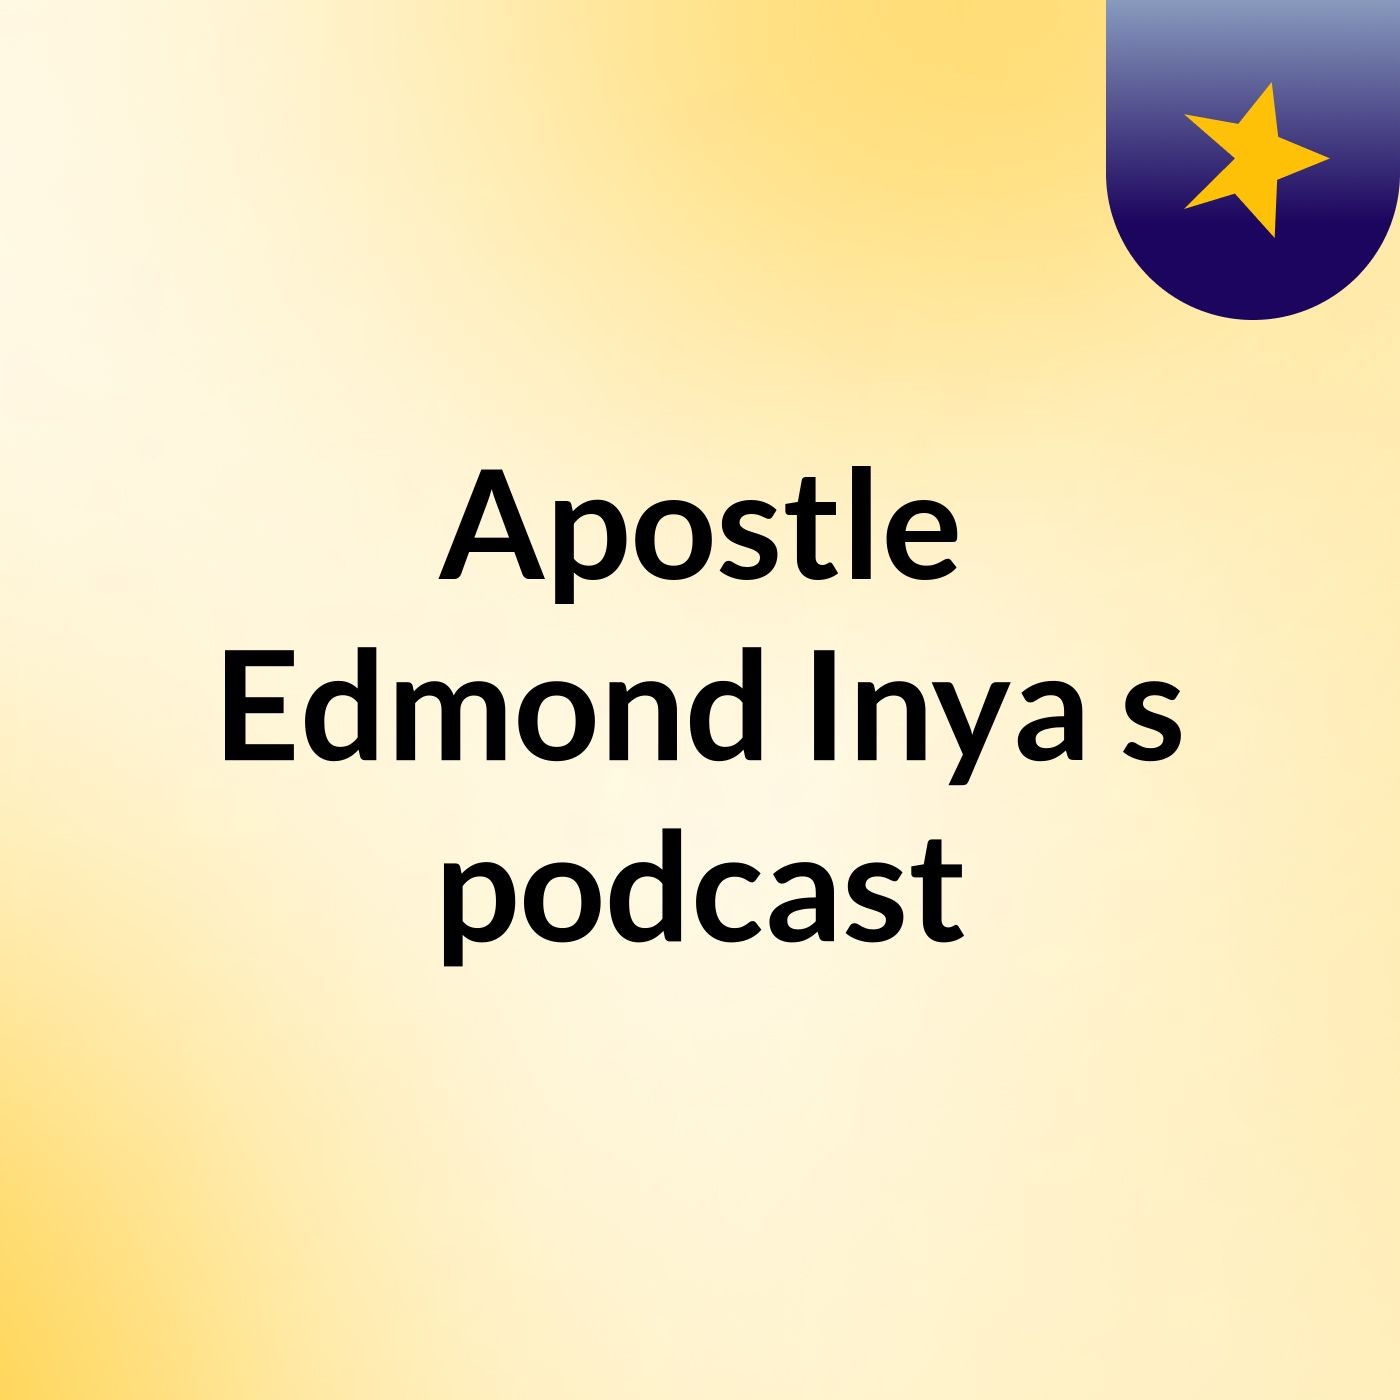 Apostle Edmond Inya's podcast